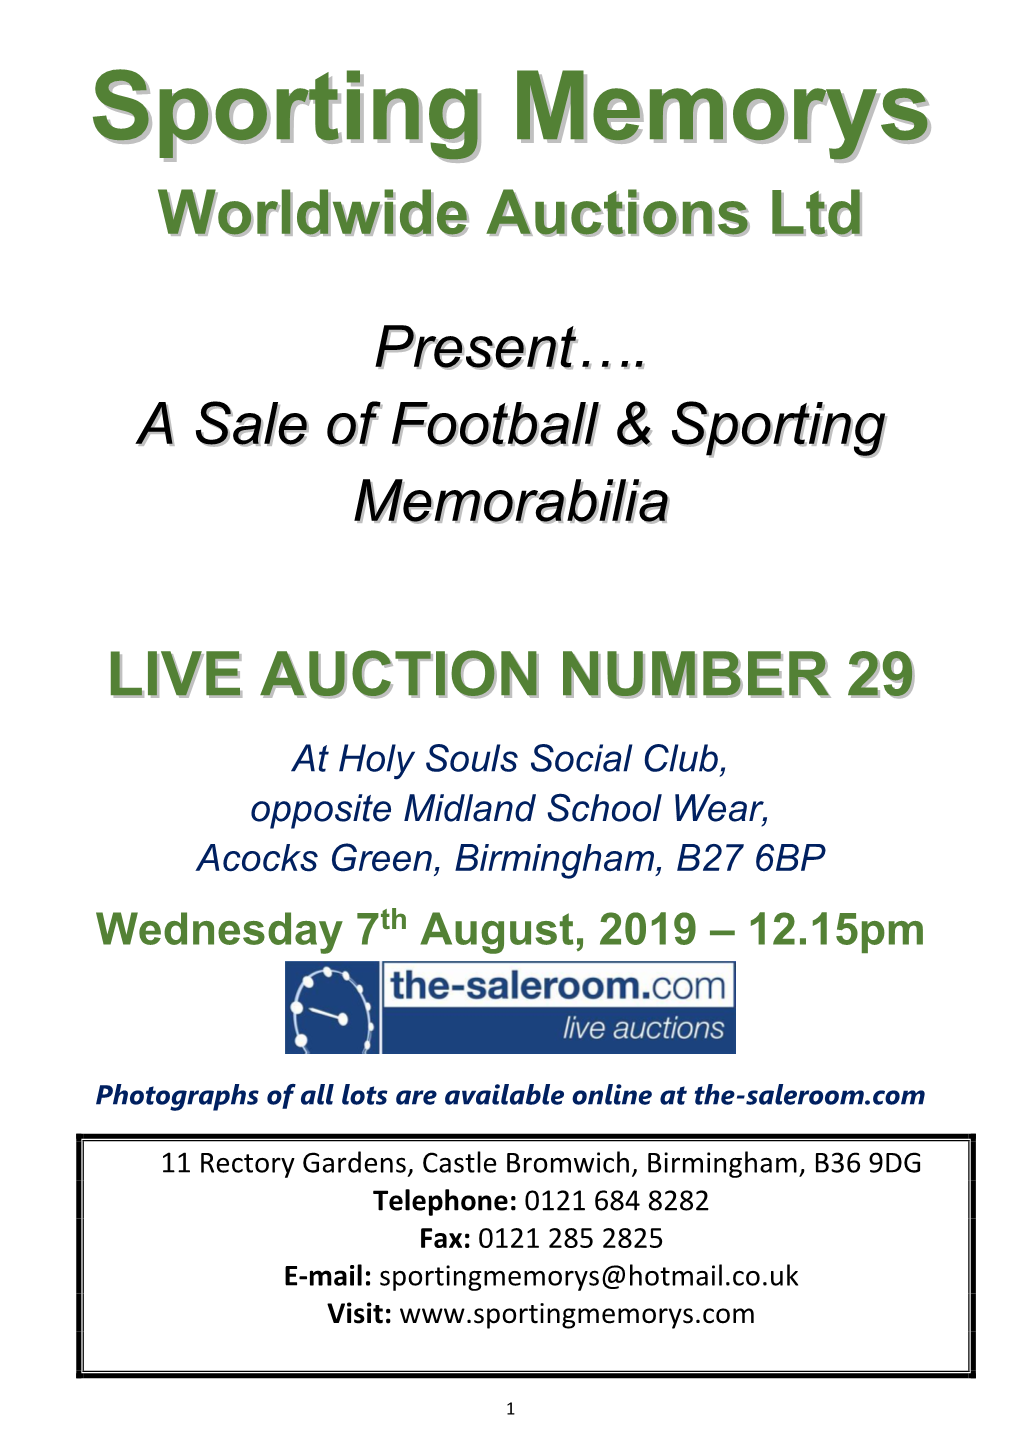 A Sale of Football & Sporting Memorabilia